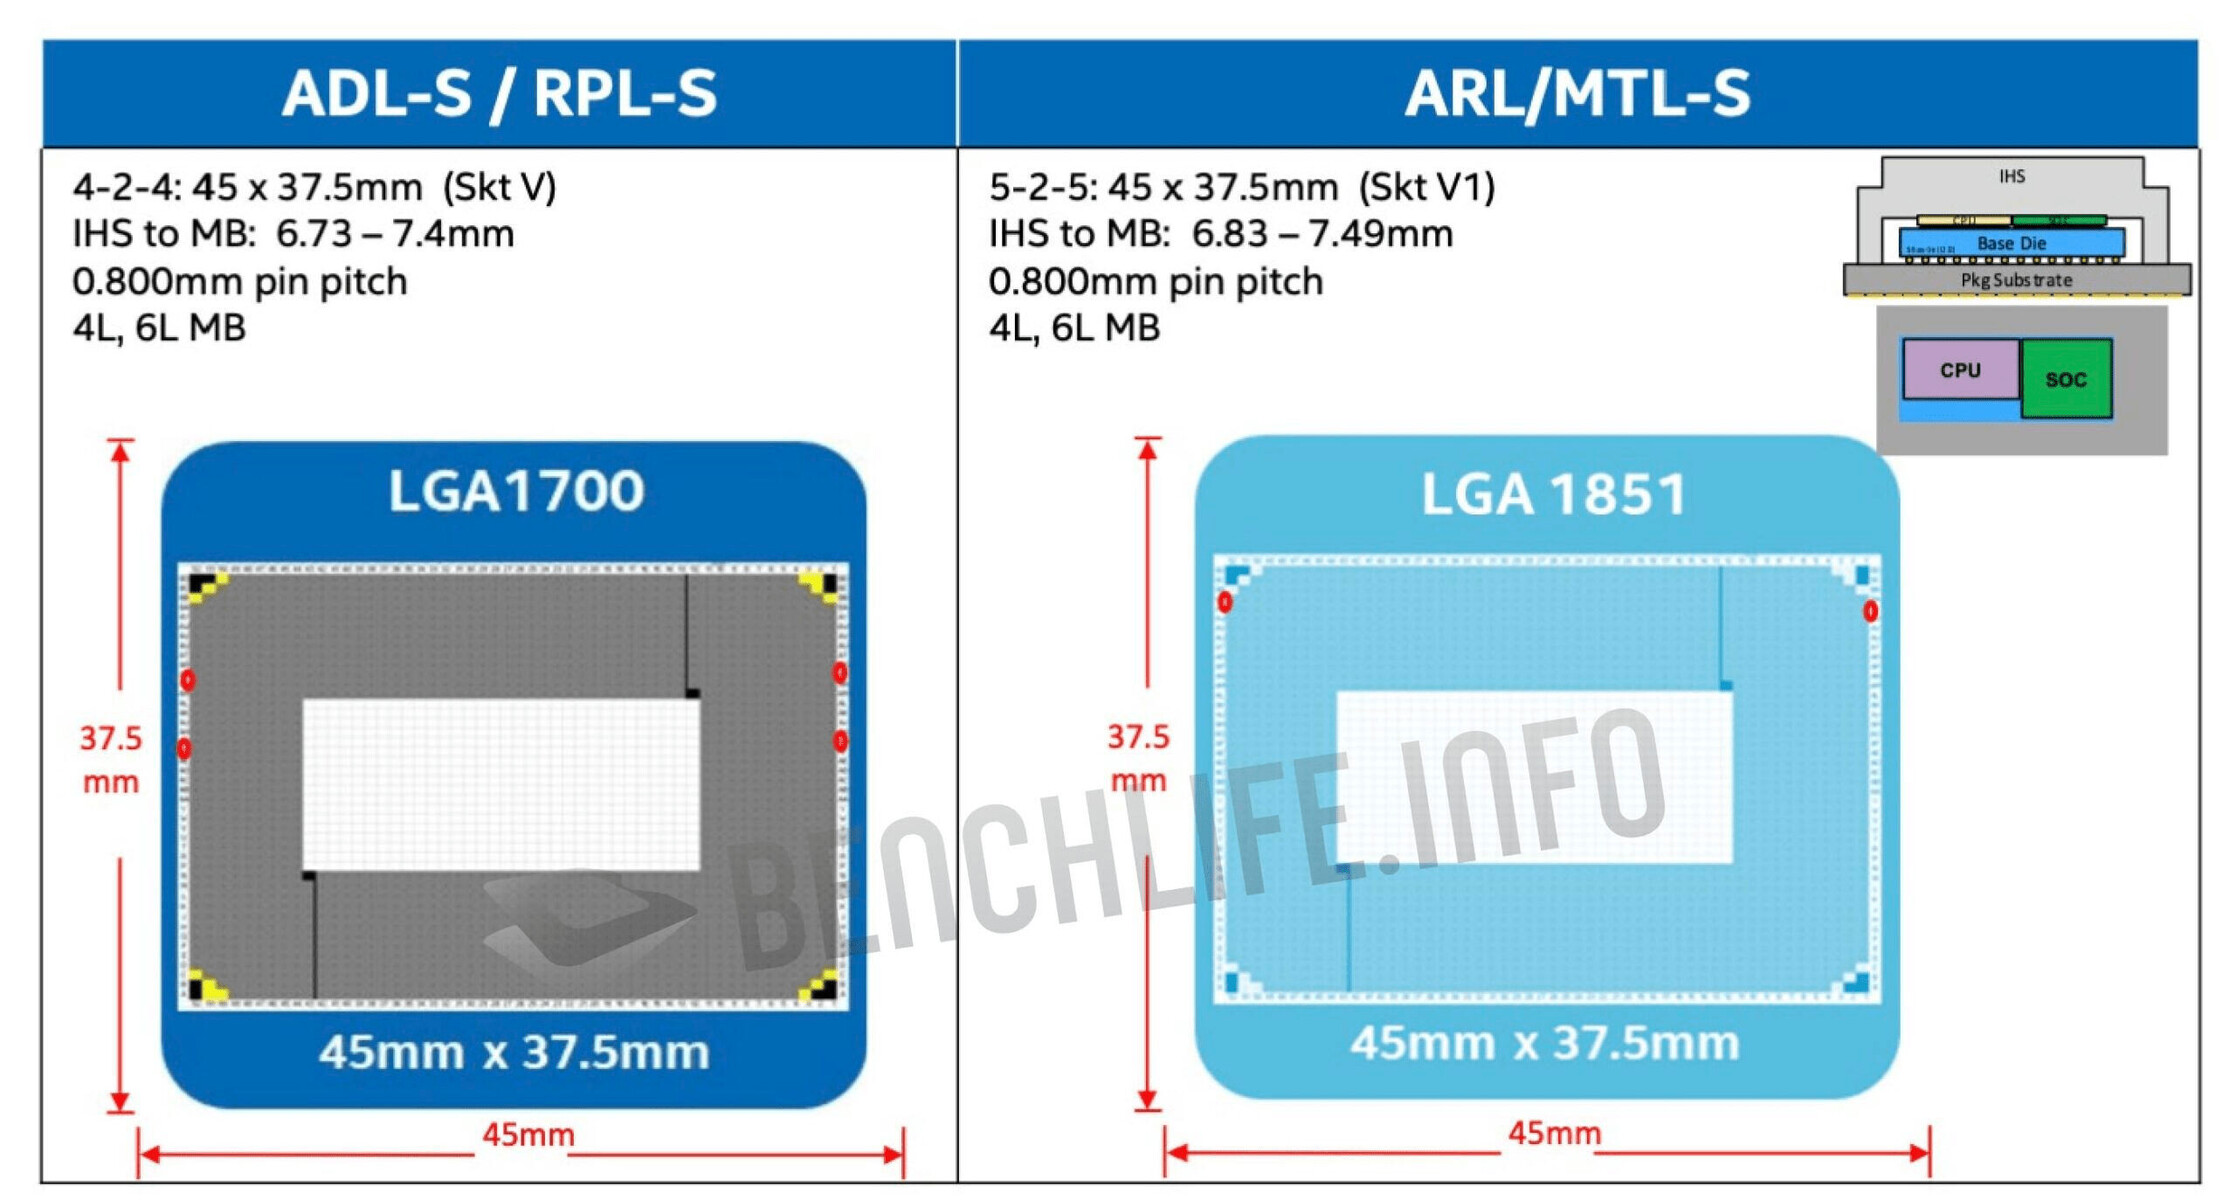 Intel LGA1851 to succeed LGA1700